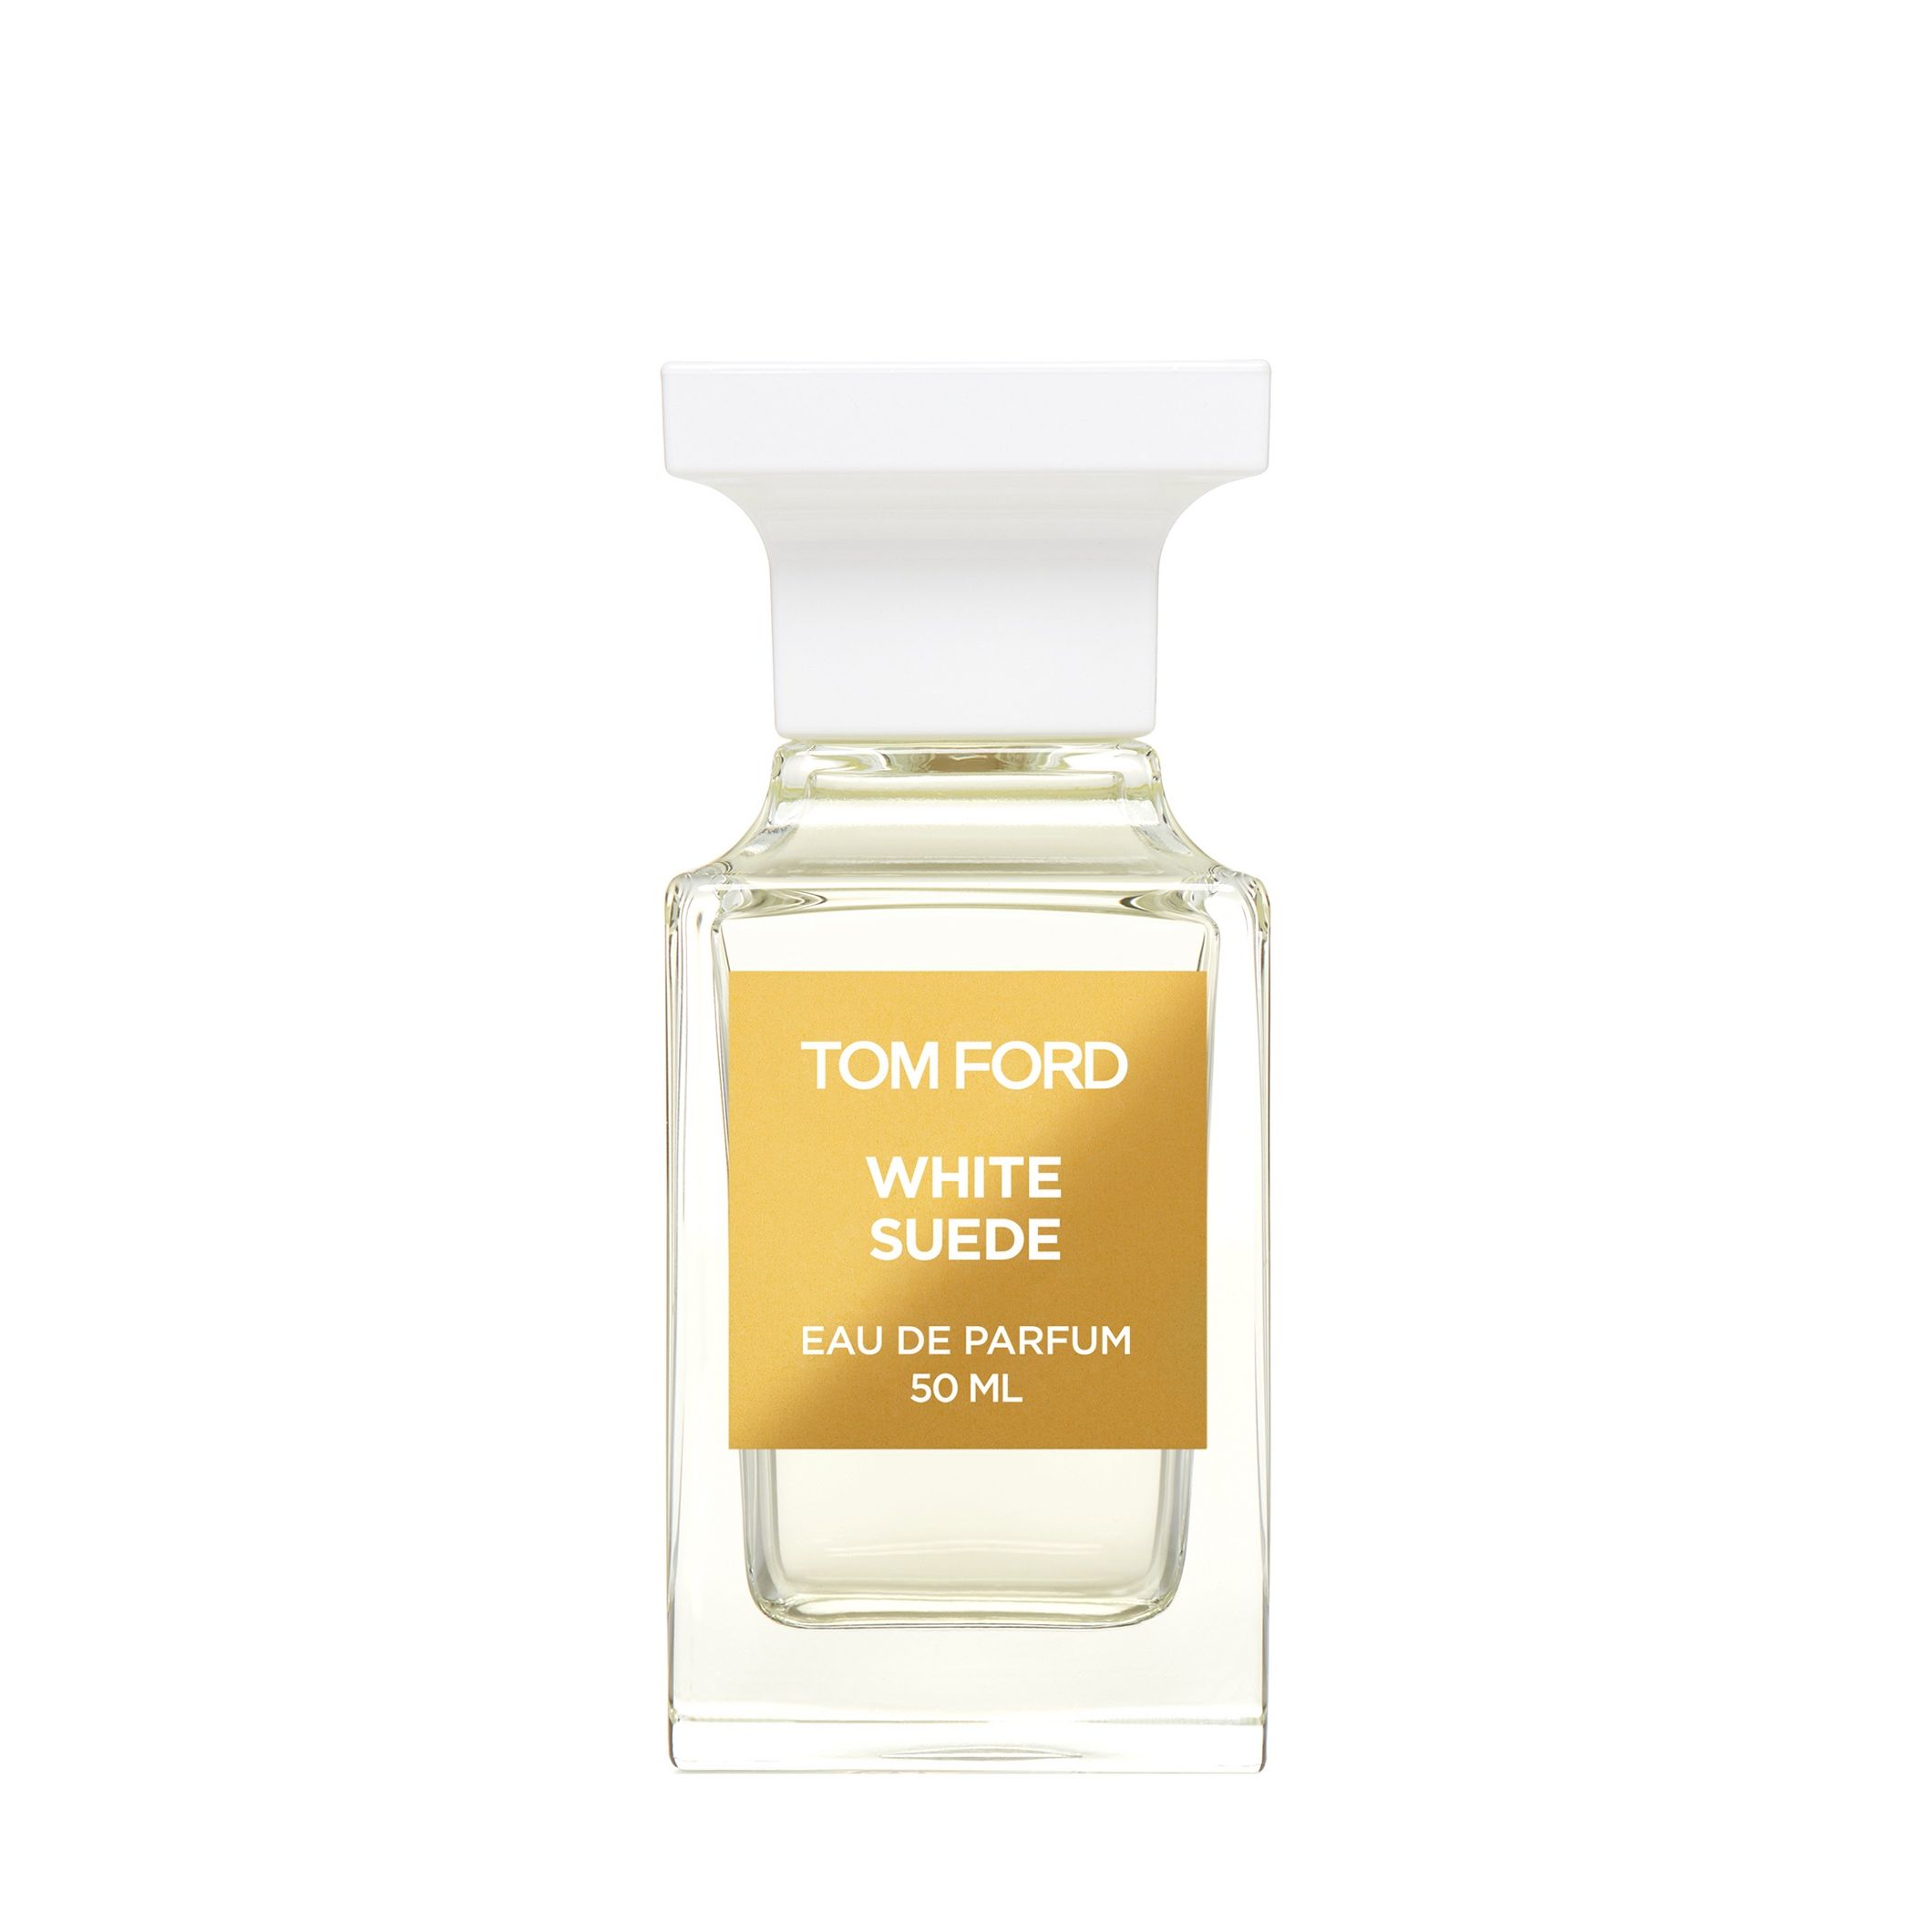 Вода парфюмерная Tom Ford White Suede, унисекс, 50 мл tom ford спрей для тела white suede